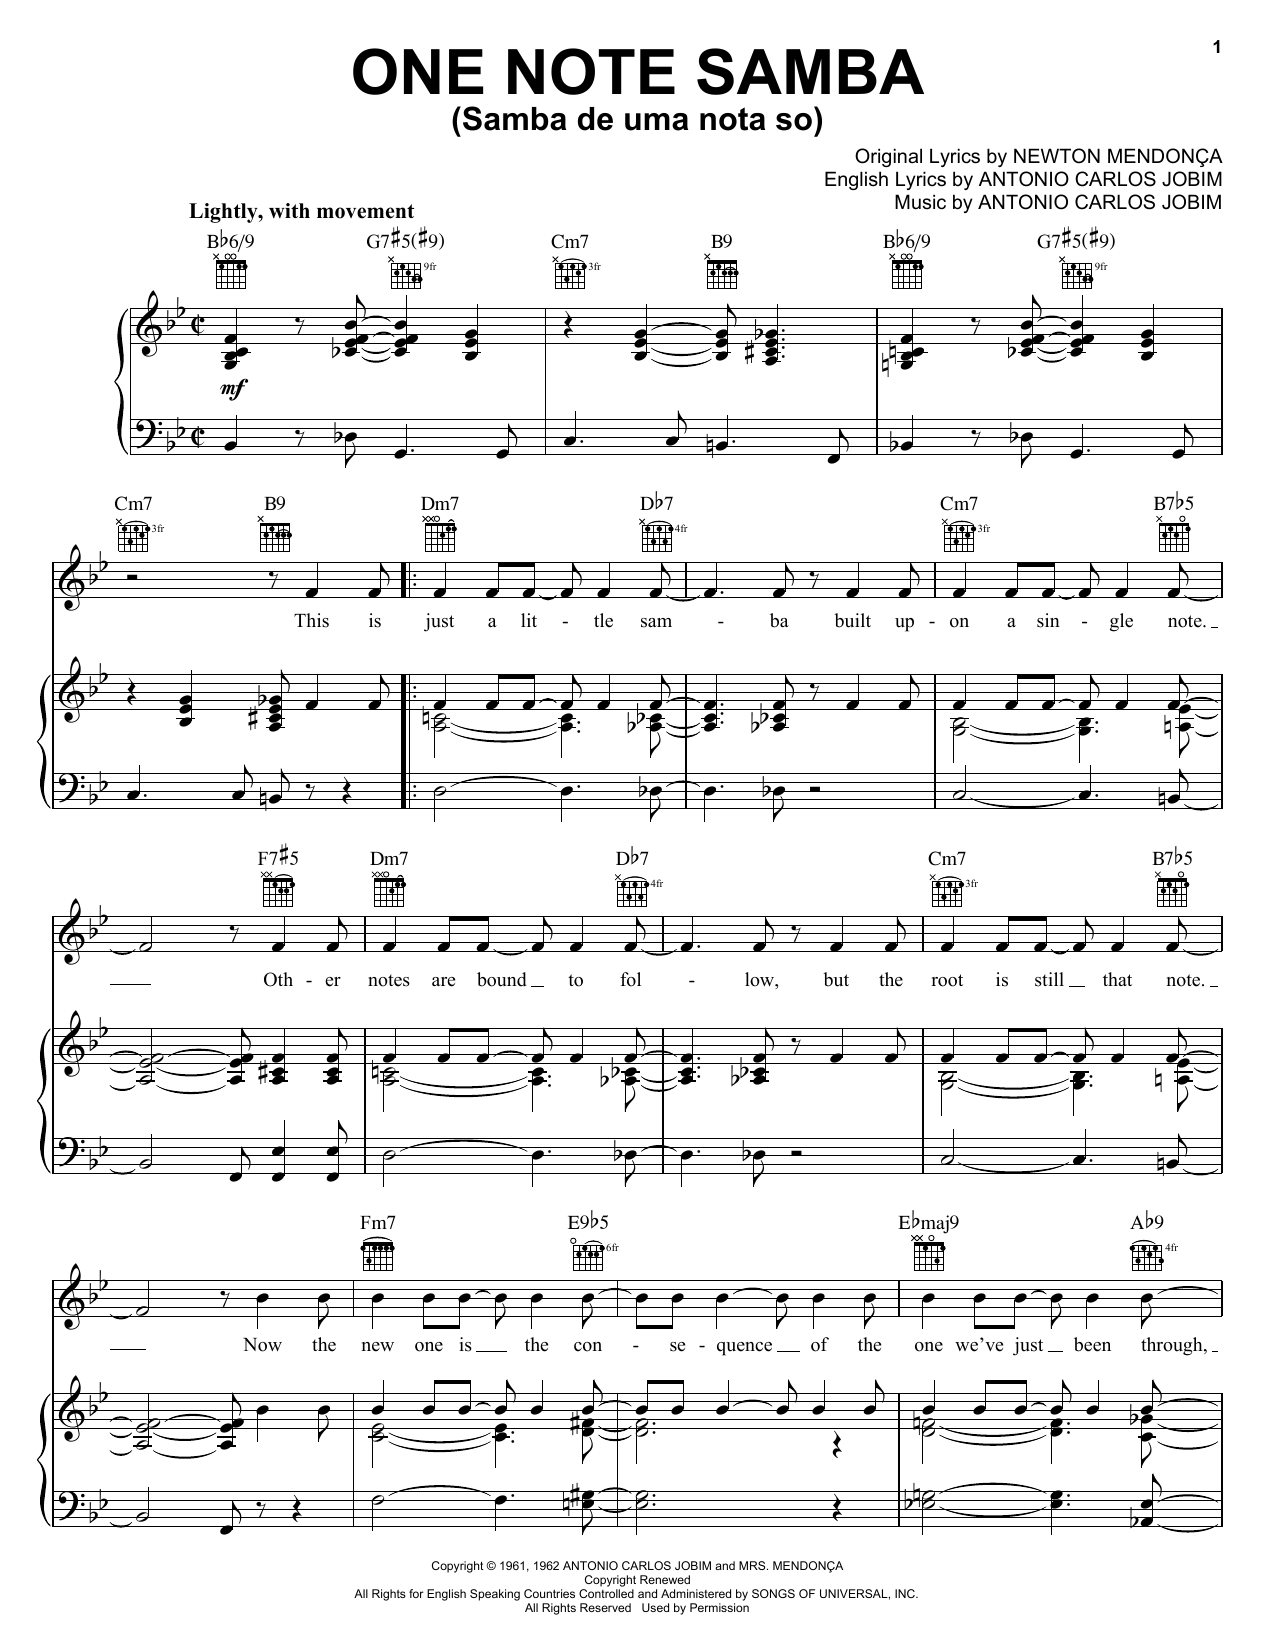 Antonio Carlos Jobim One Note Samba (Samba De Uma Nota So) Sheet Music Notes & Chords for Piano, Vocal & Guitar (Right-Hand Melody) - Download or Print PDF